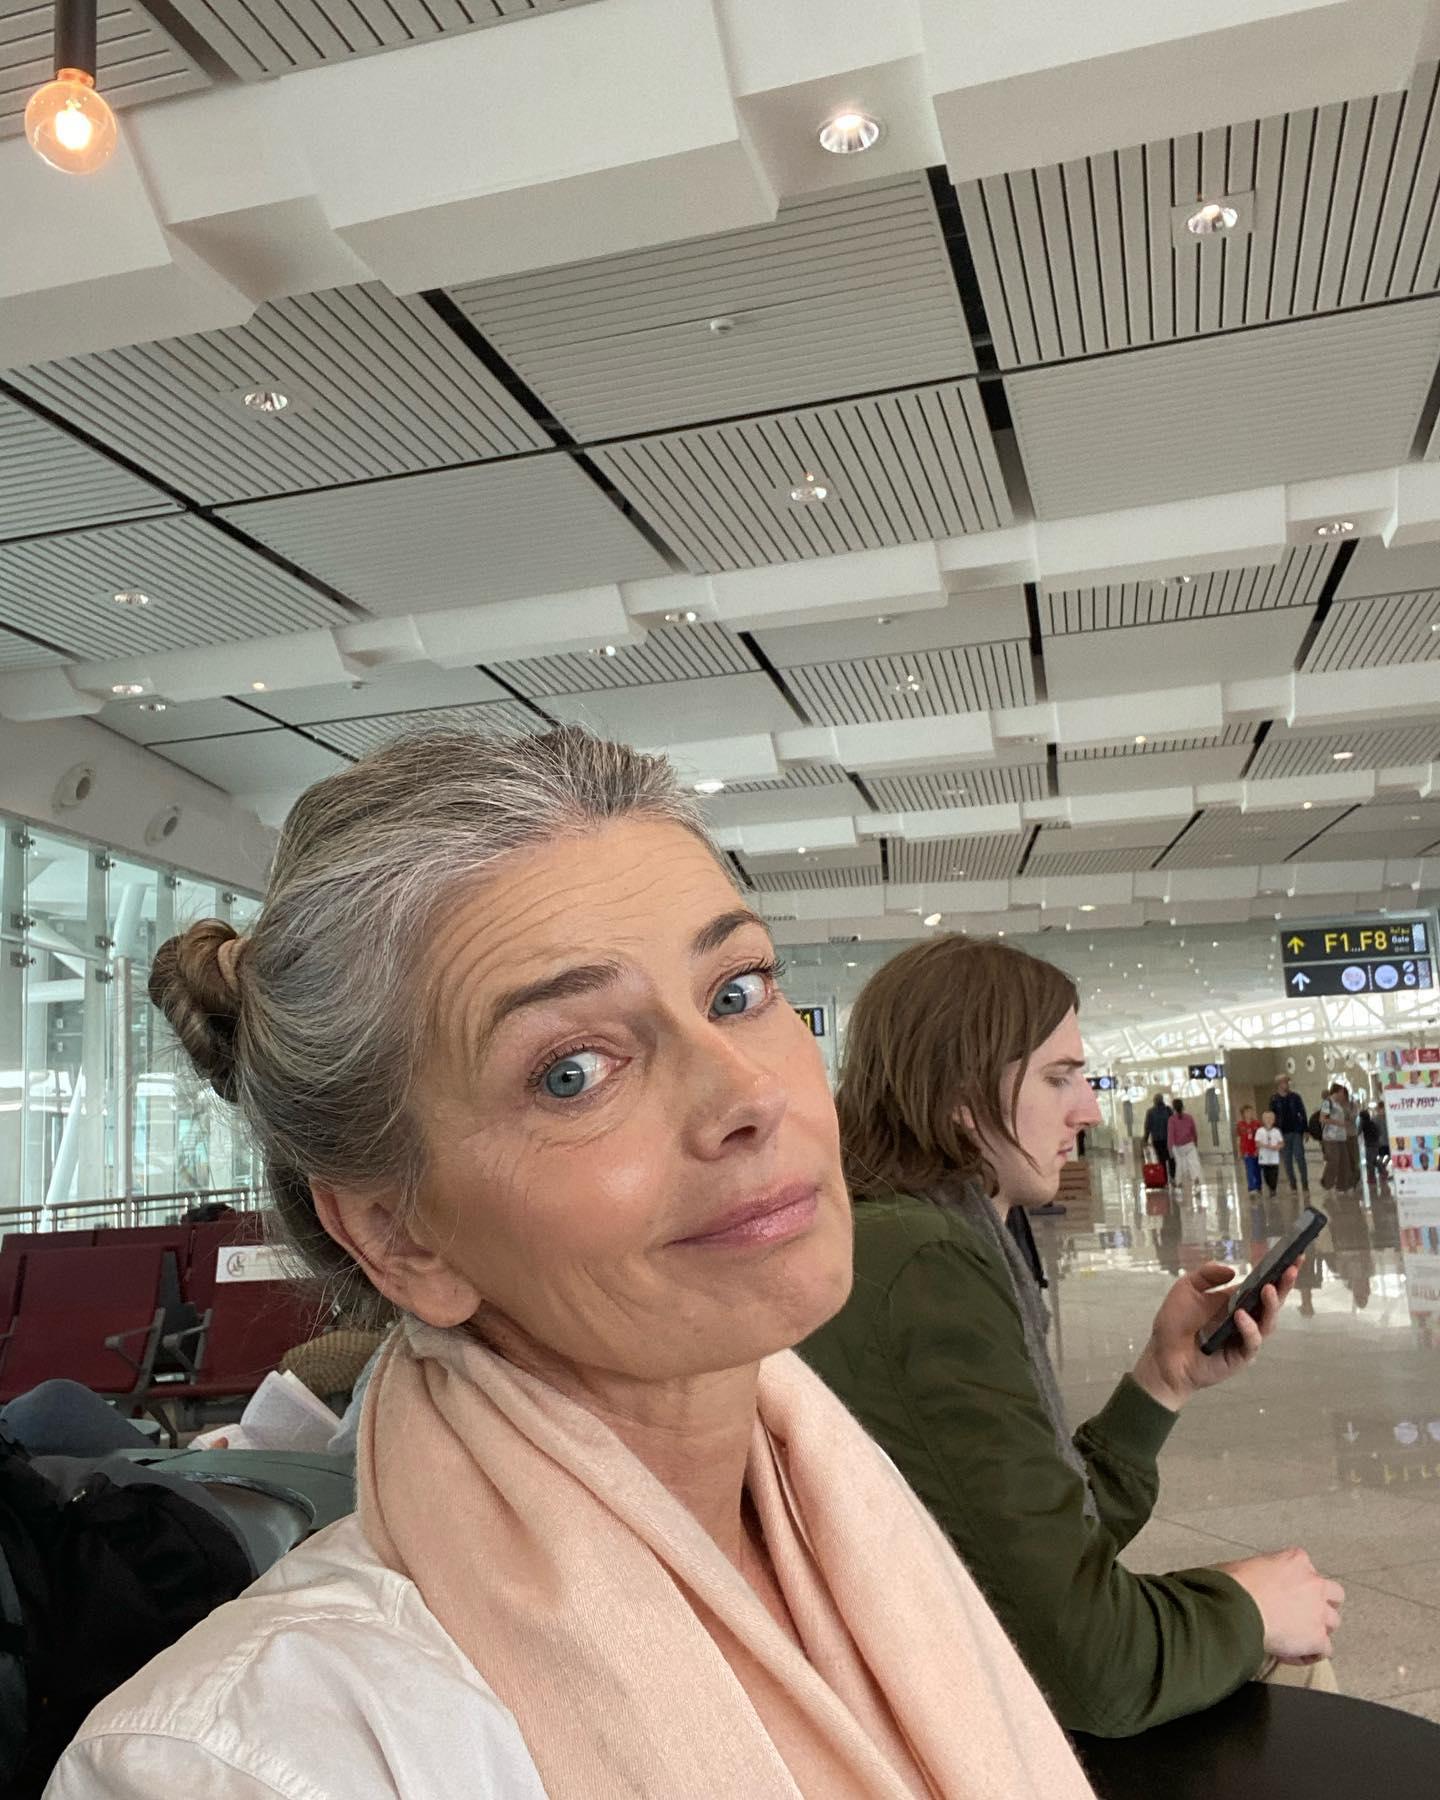 Paulina Porizkova shares a selfie in the airport